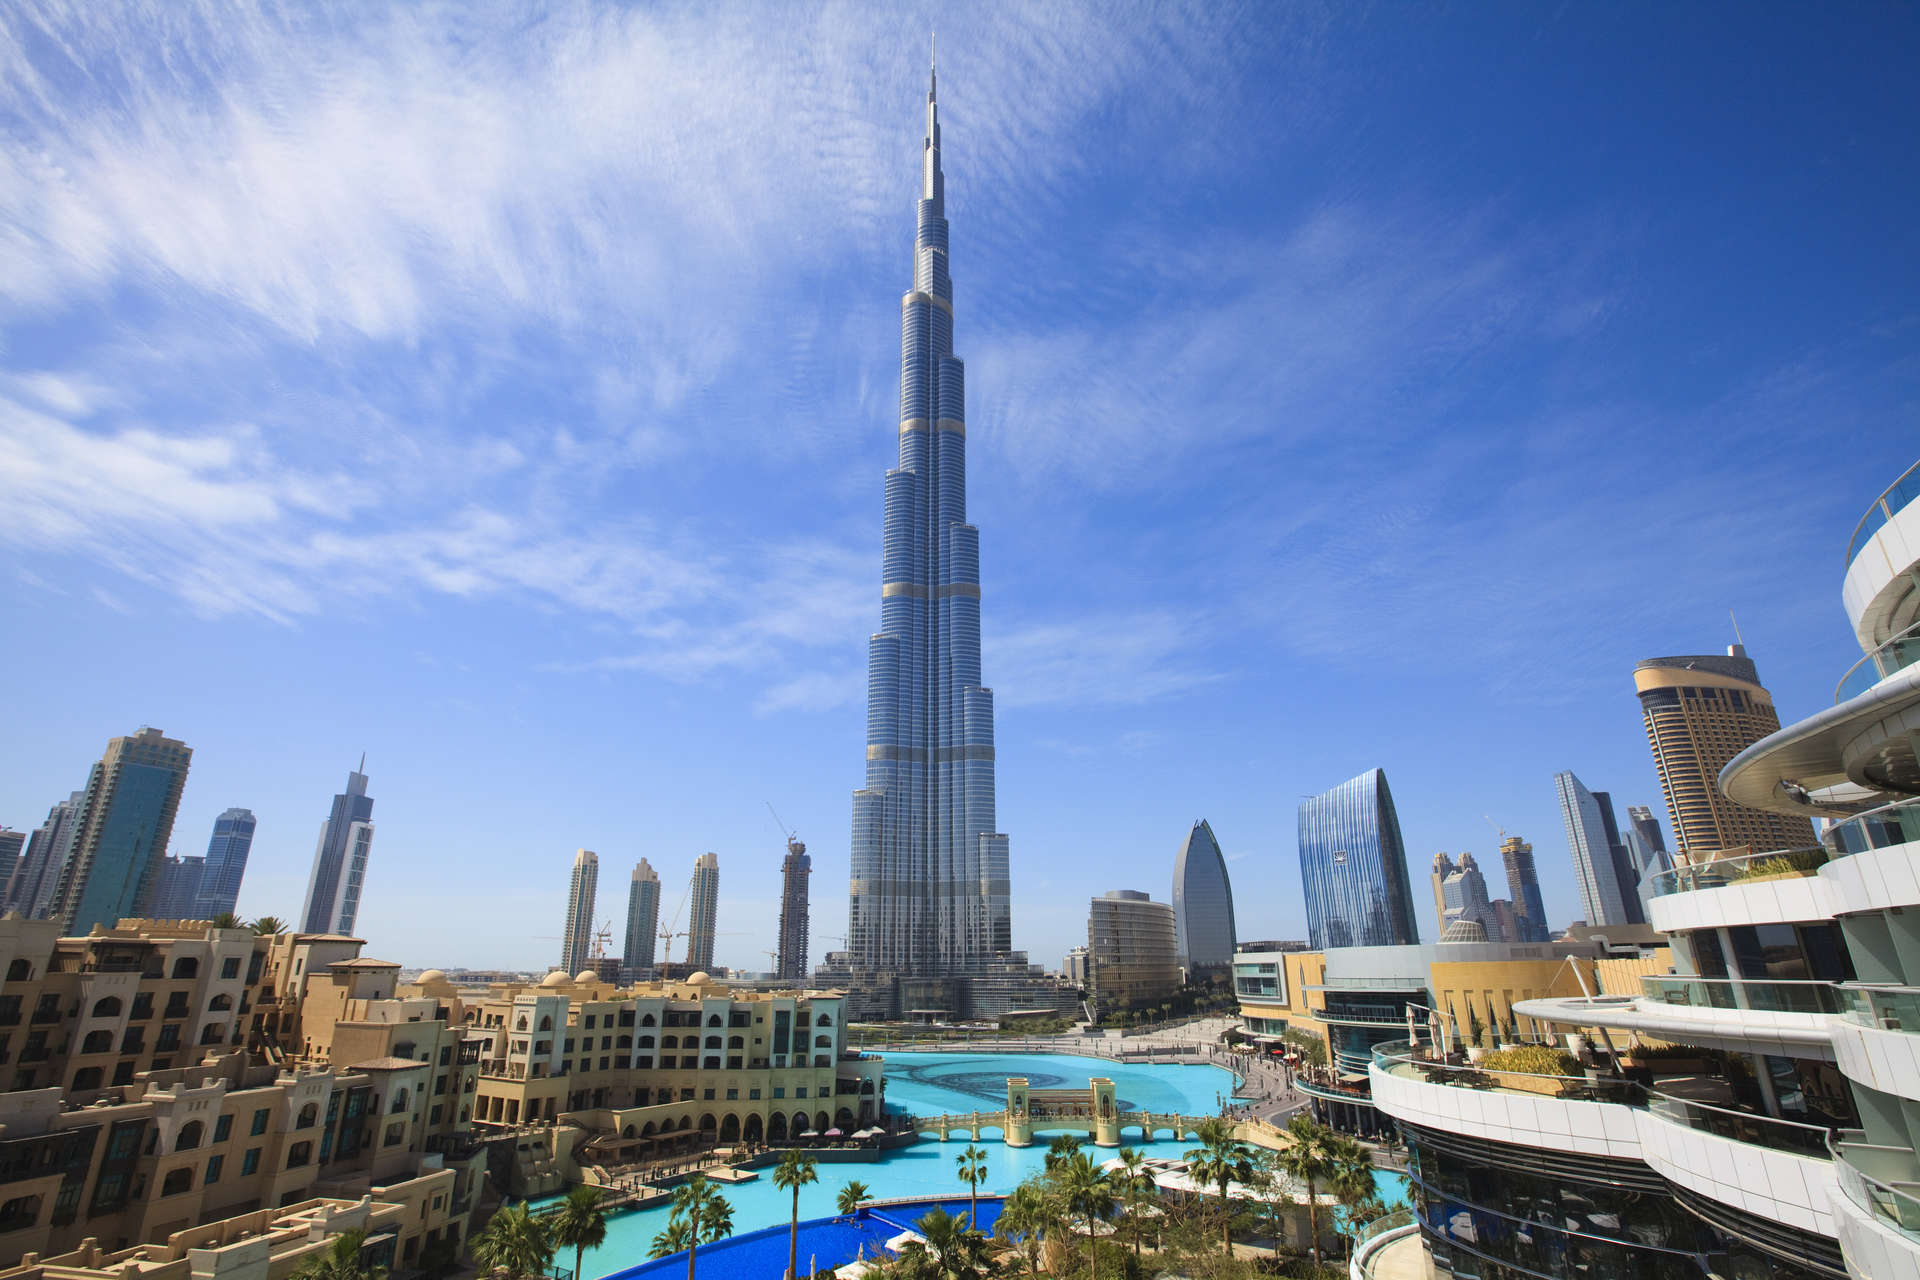 The Burj Khalifa is the world's tallest building